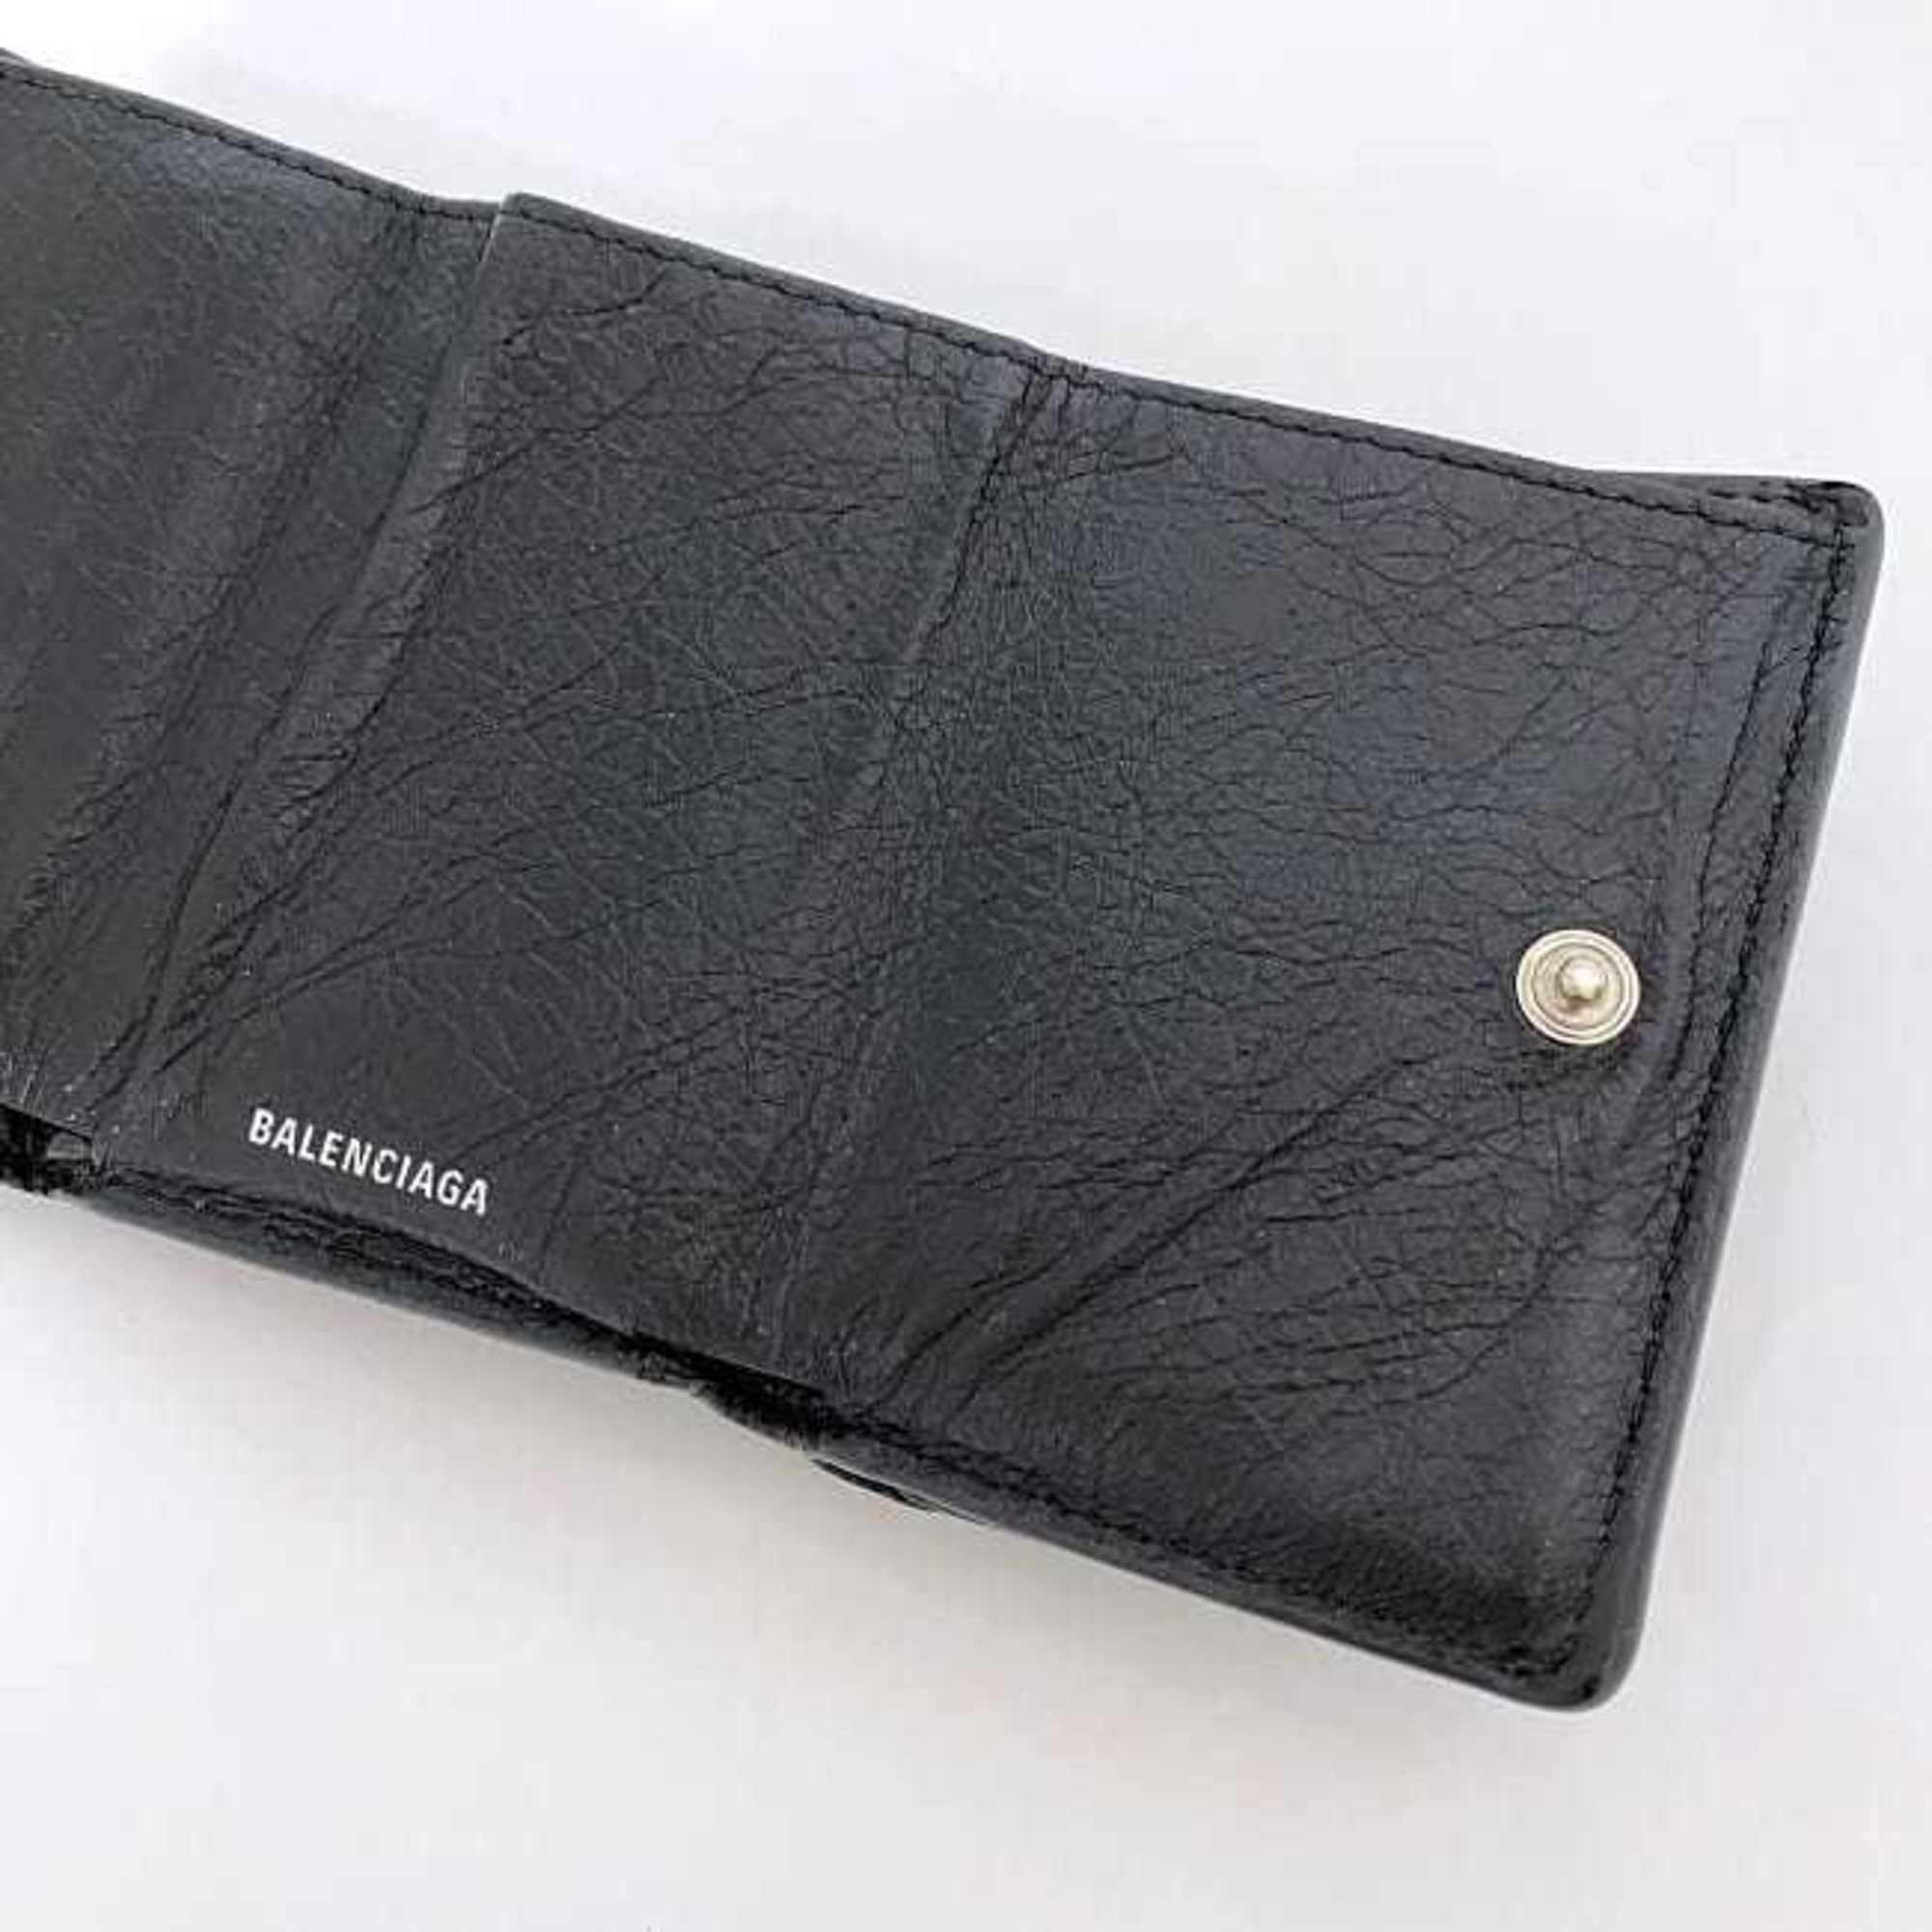 Balenciaga Tri-fold Wallet Paper Black 391446 1090 x 53224 ec-20413 Leather BALENCIAGA Compact Paint Men's Women's